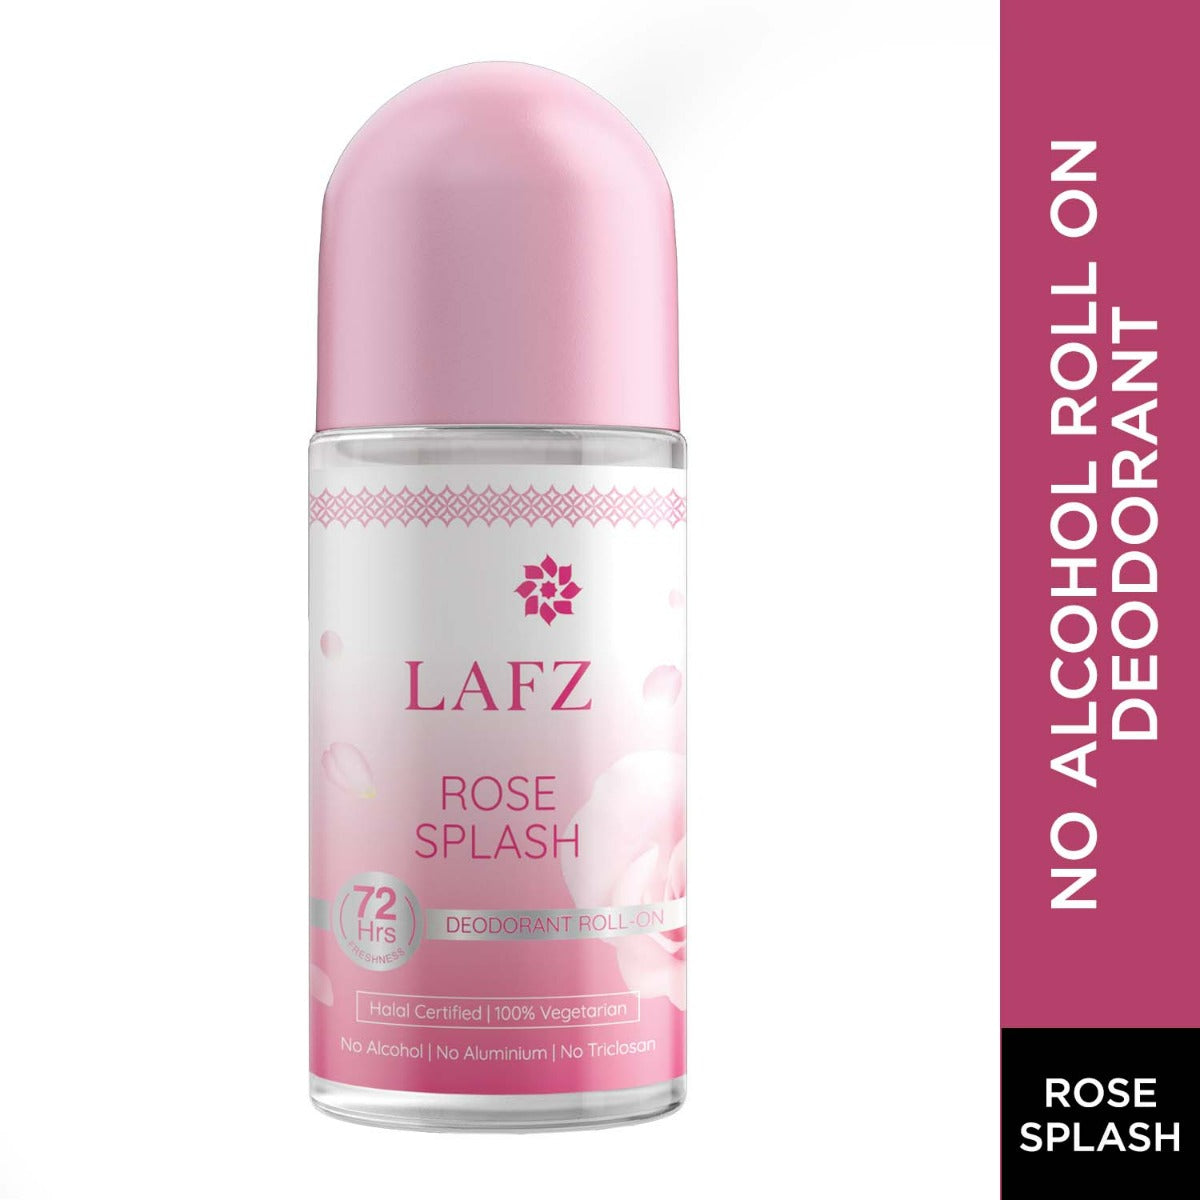 LAFZ No Alcohol Roll On Deodorant Rose Splash for Women (50ml)